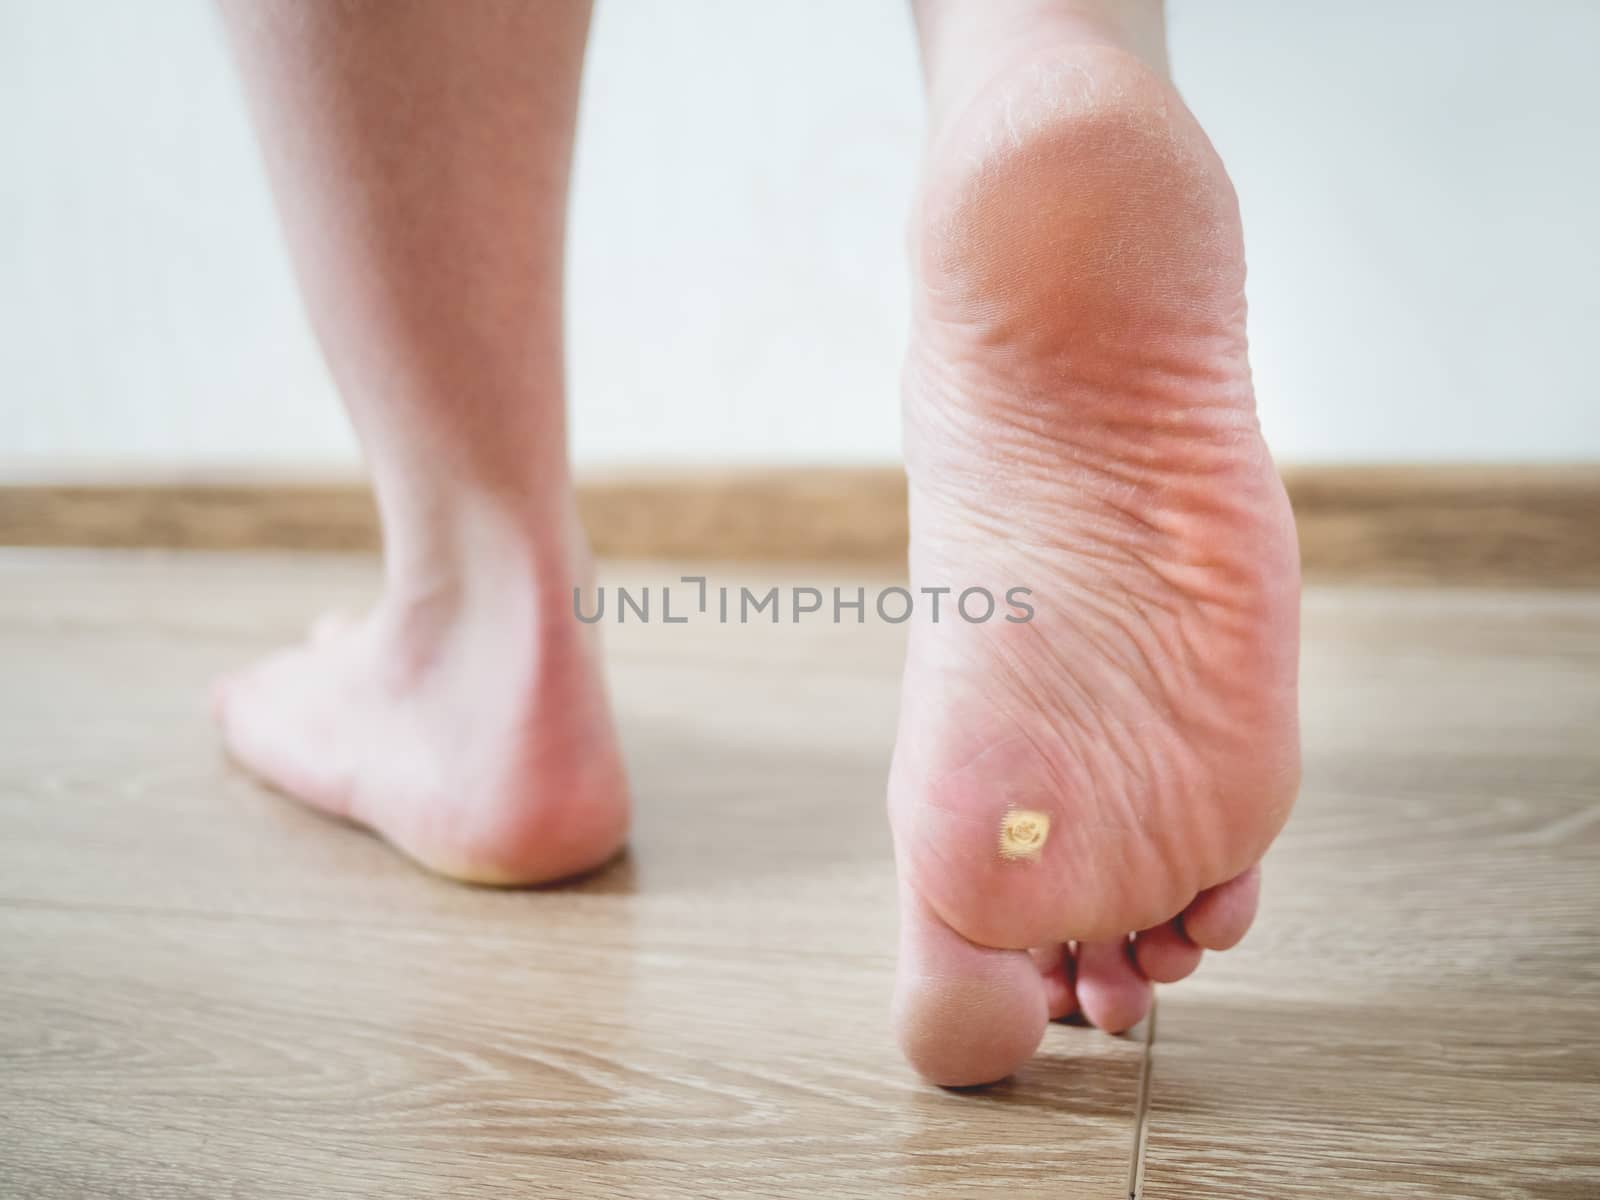 Close up photo of plantar wart on man's foot. Verruca plantaris on the heel.